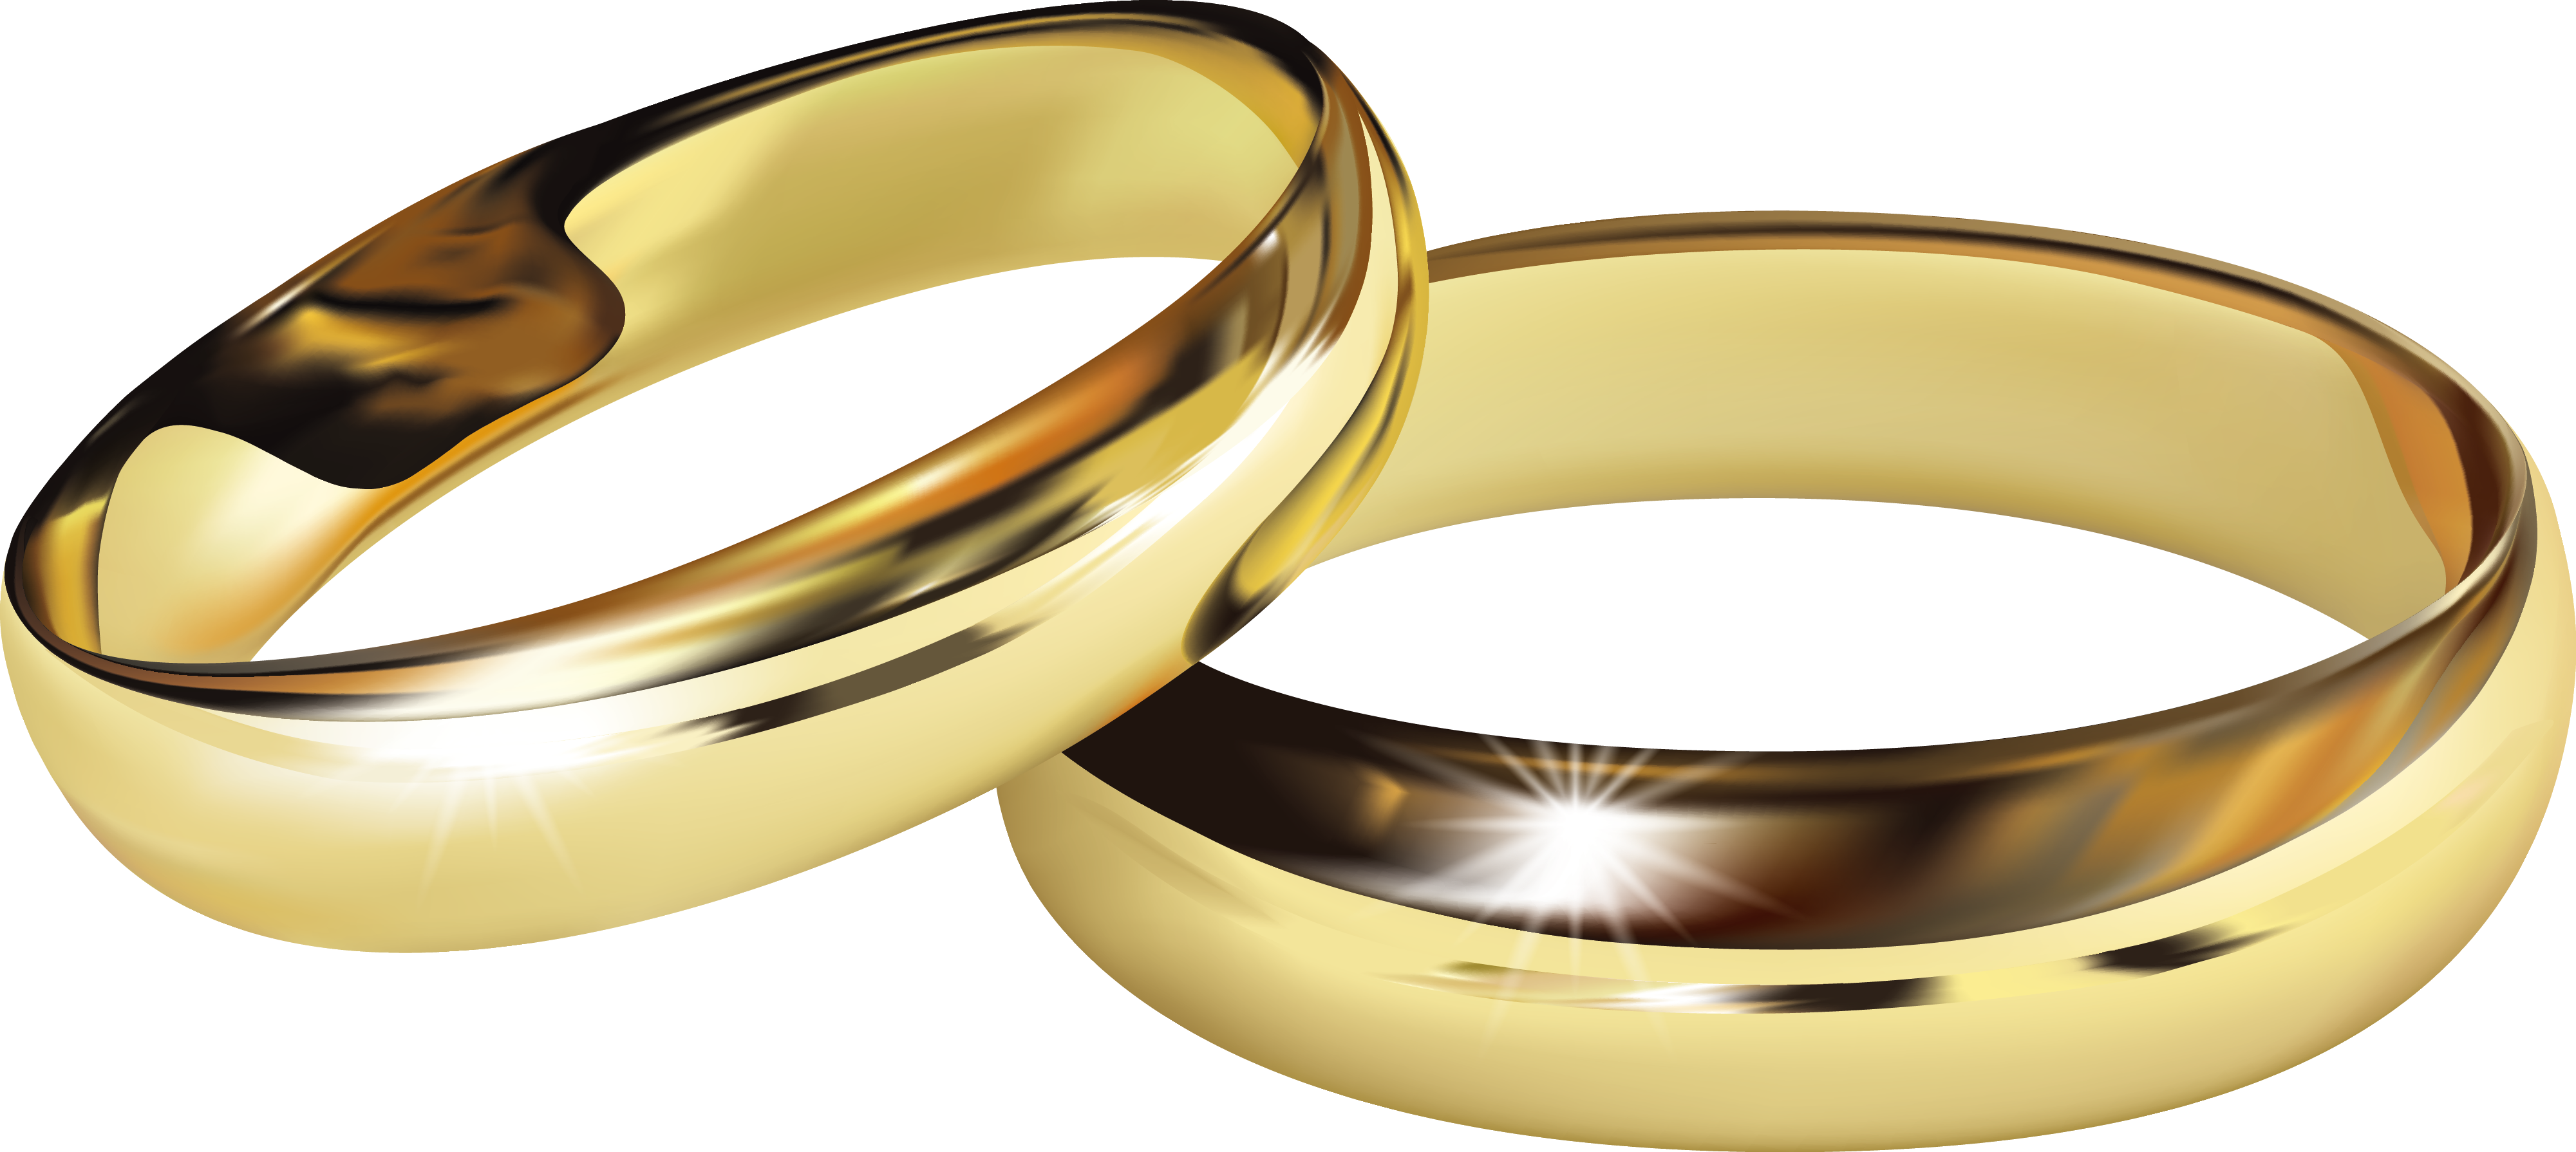 Wedding Ring Engagement Ring Png Transparent Engagement Ring 2 